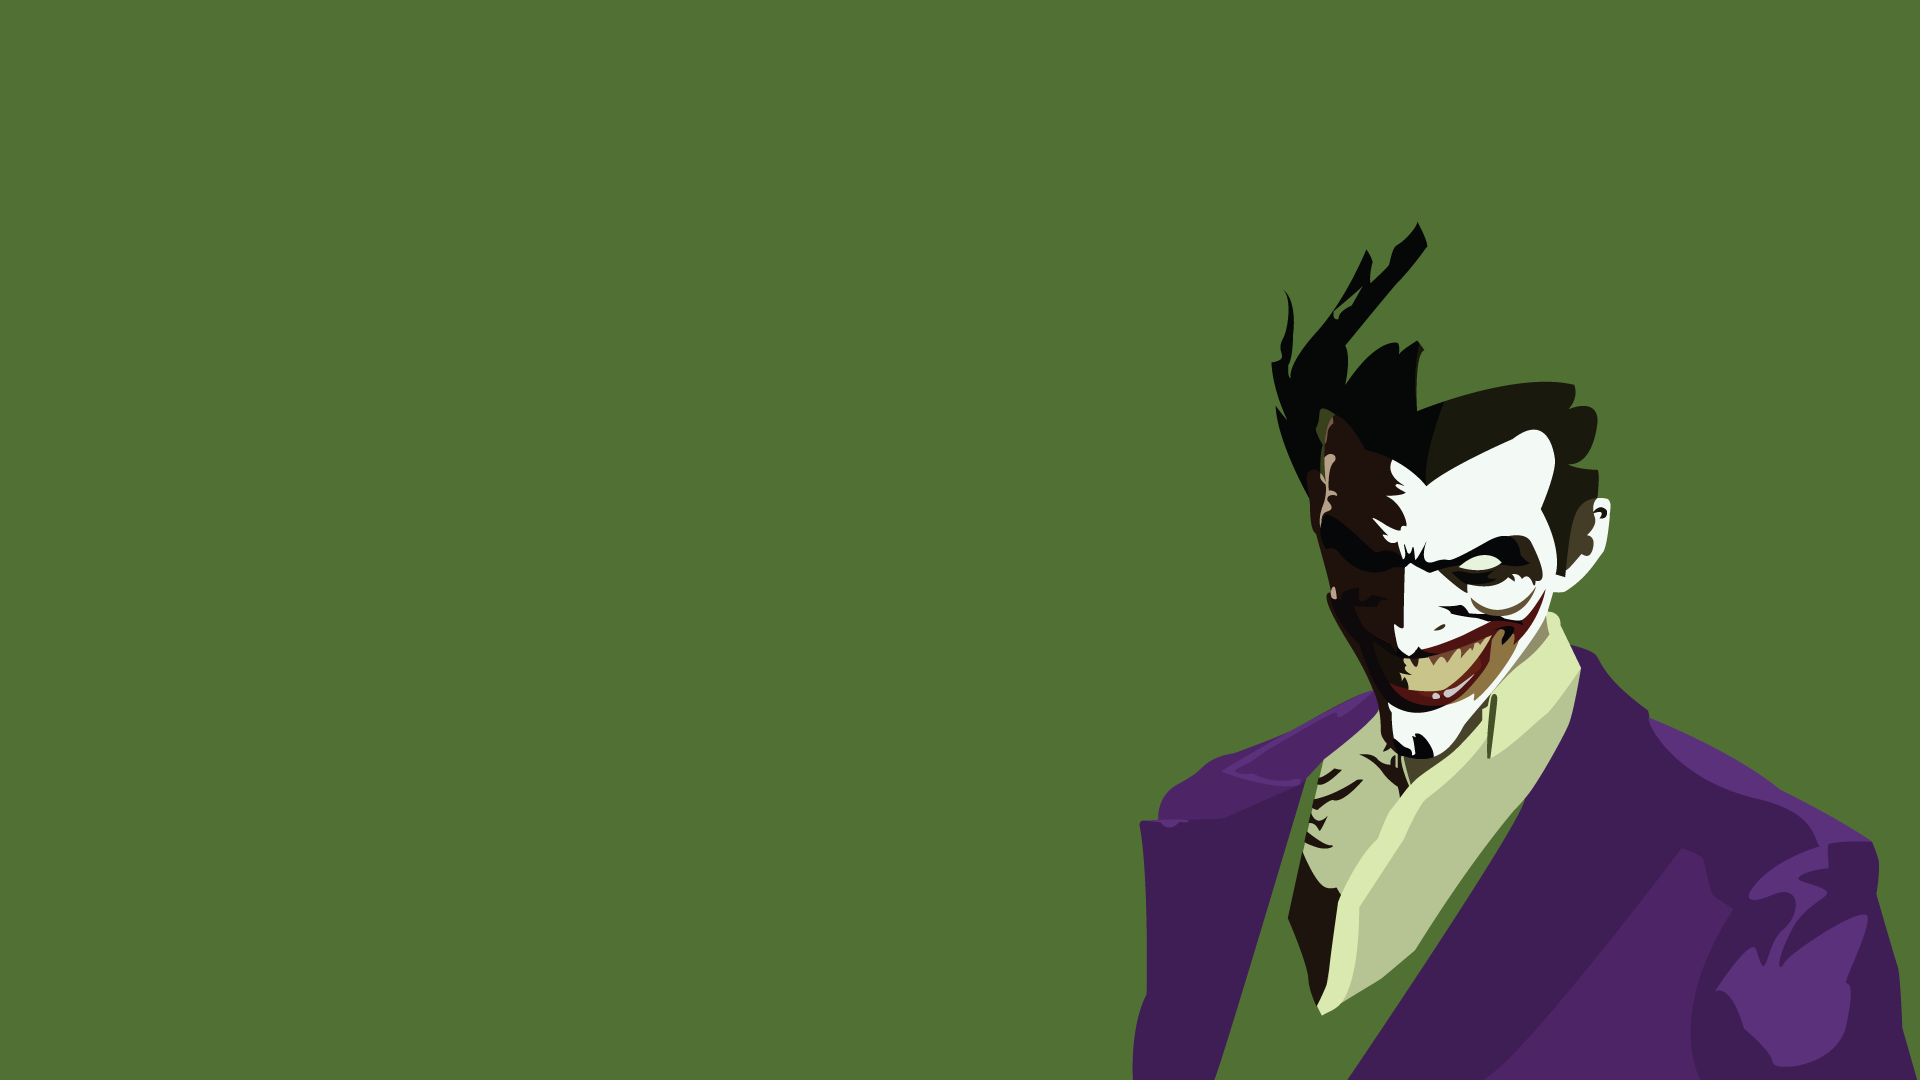 Joker HD Wallpaper | Background Image | 1920x1080 | ID ...